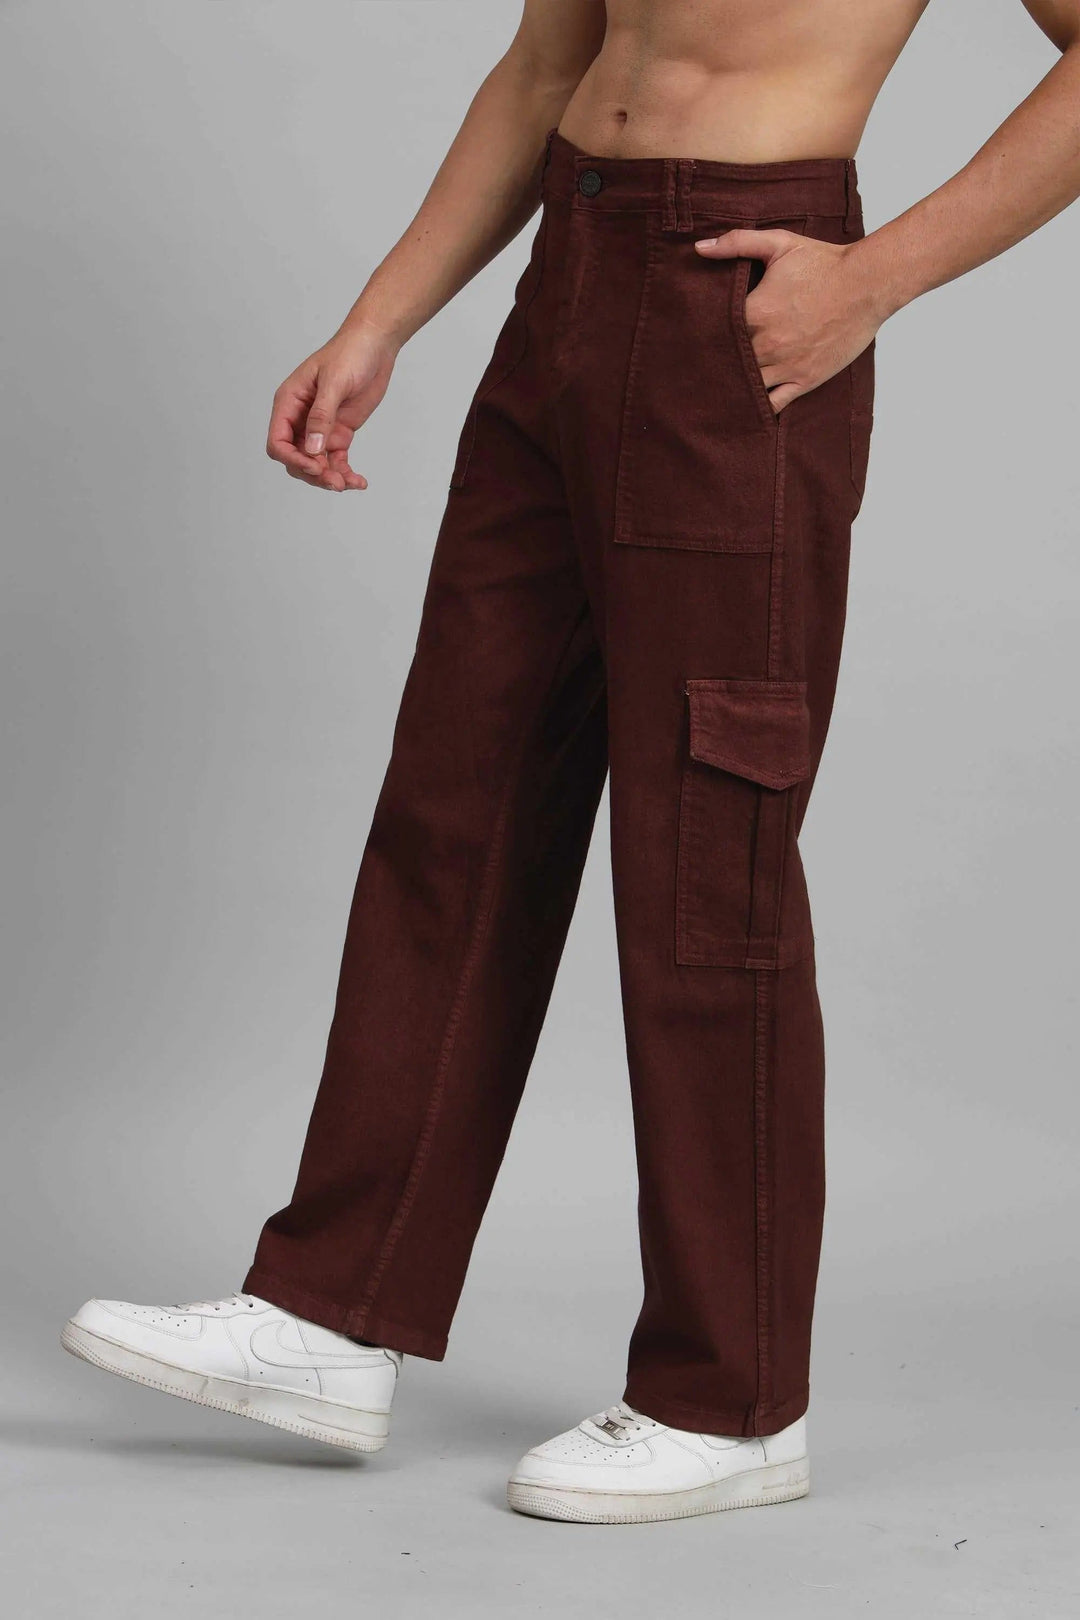 Men's Loose Fit Multiple Pocket Brown Denim Cargo Pant - Peplos Jeans 